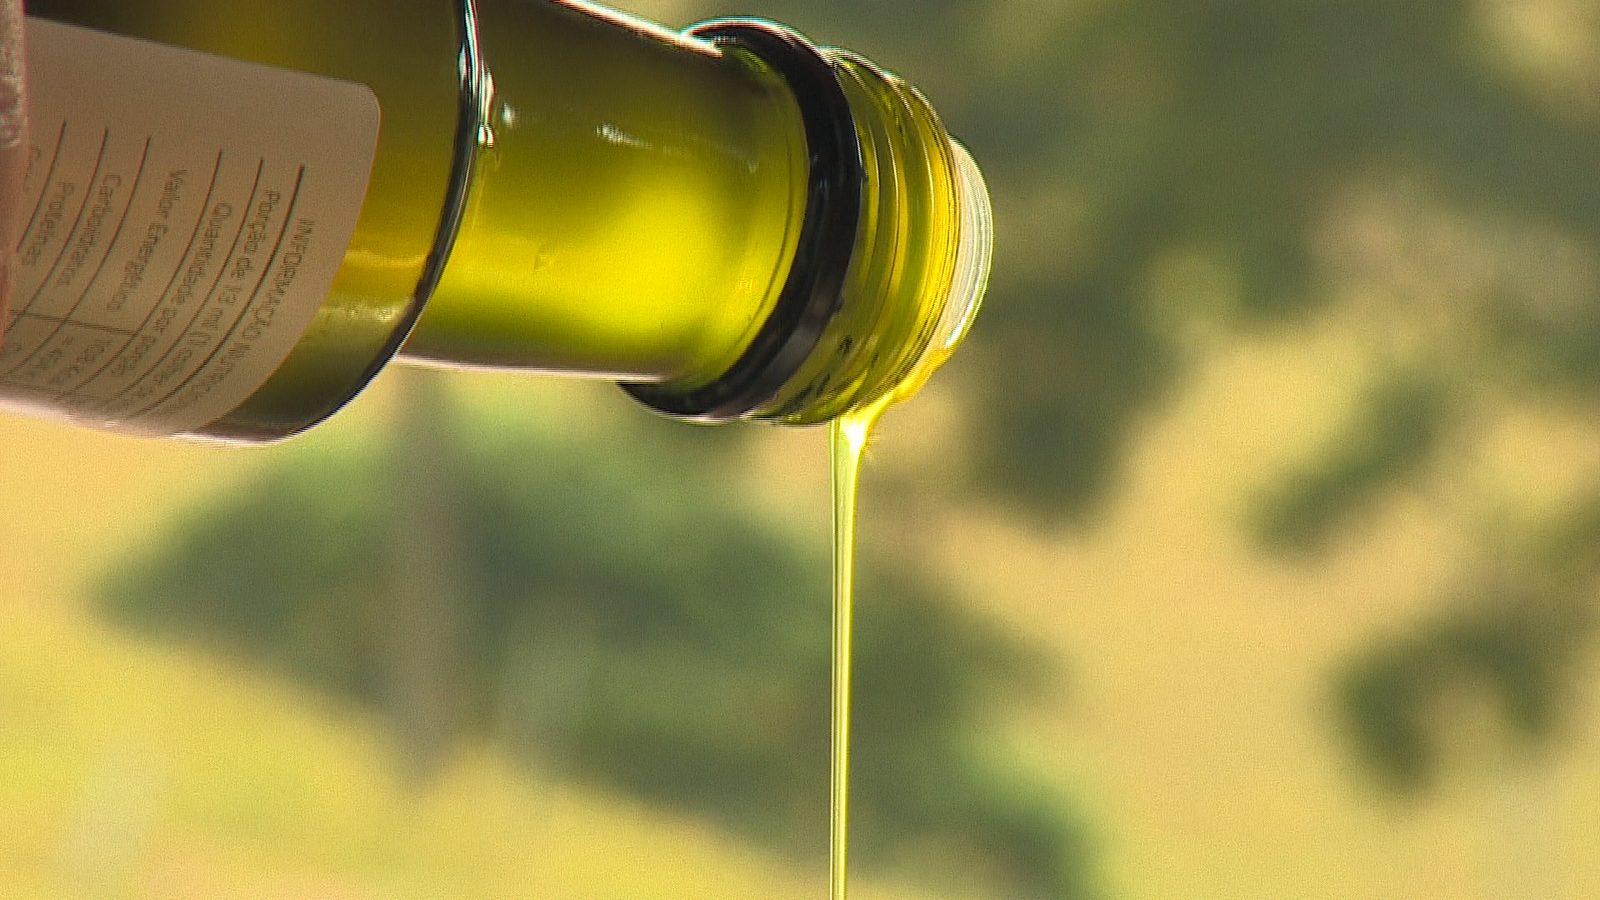 Ministério da Agricultura proíbe venda de seis marcas de azeite de oliva